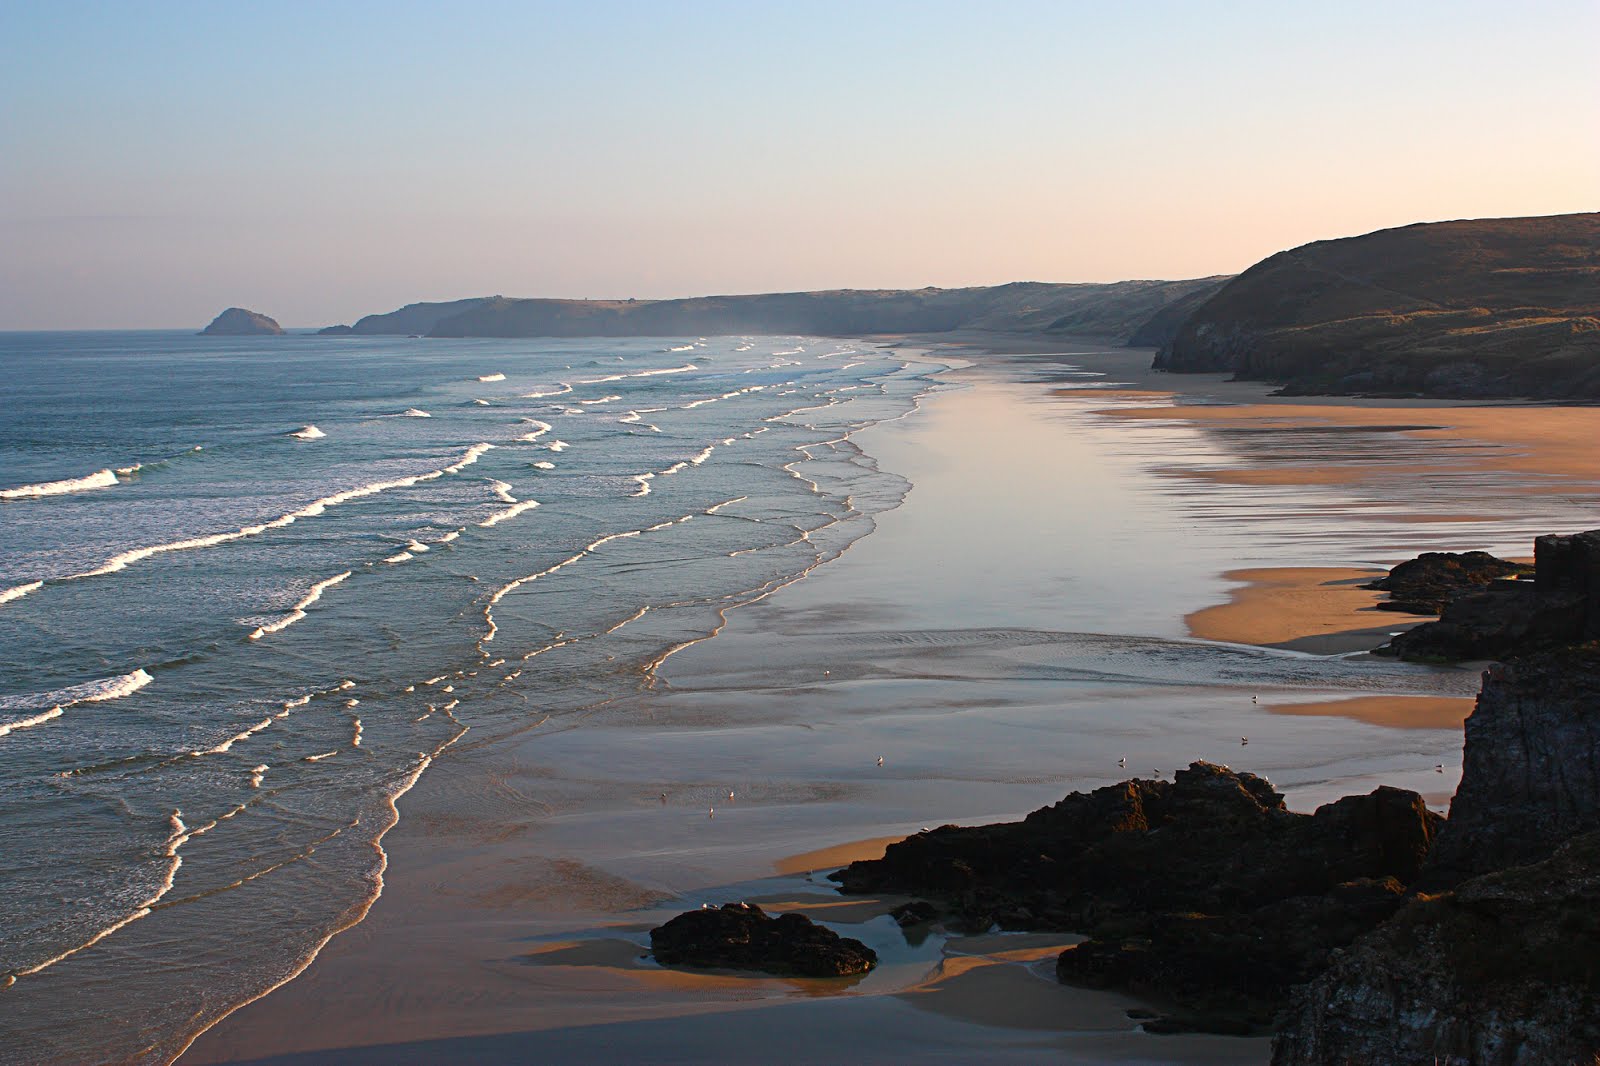 Story telling to accompany amazing views of the Cornish coast